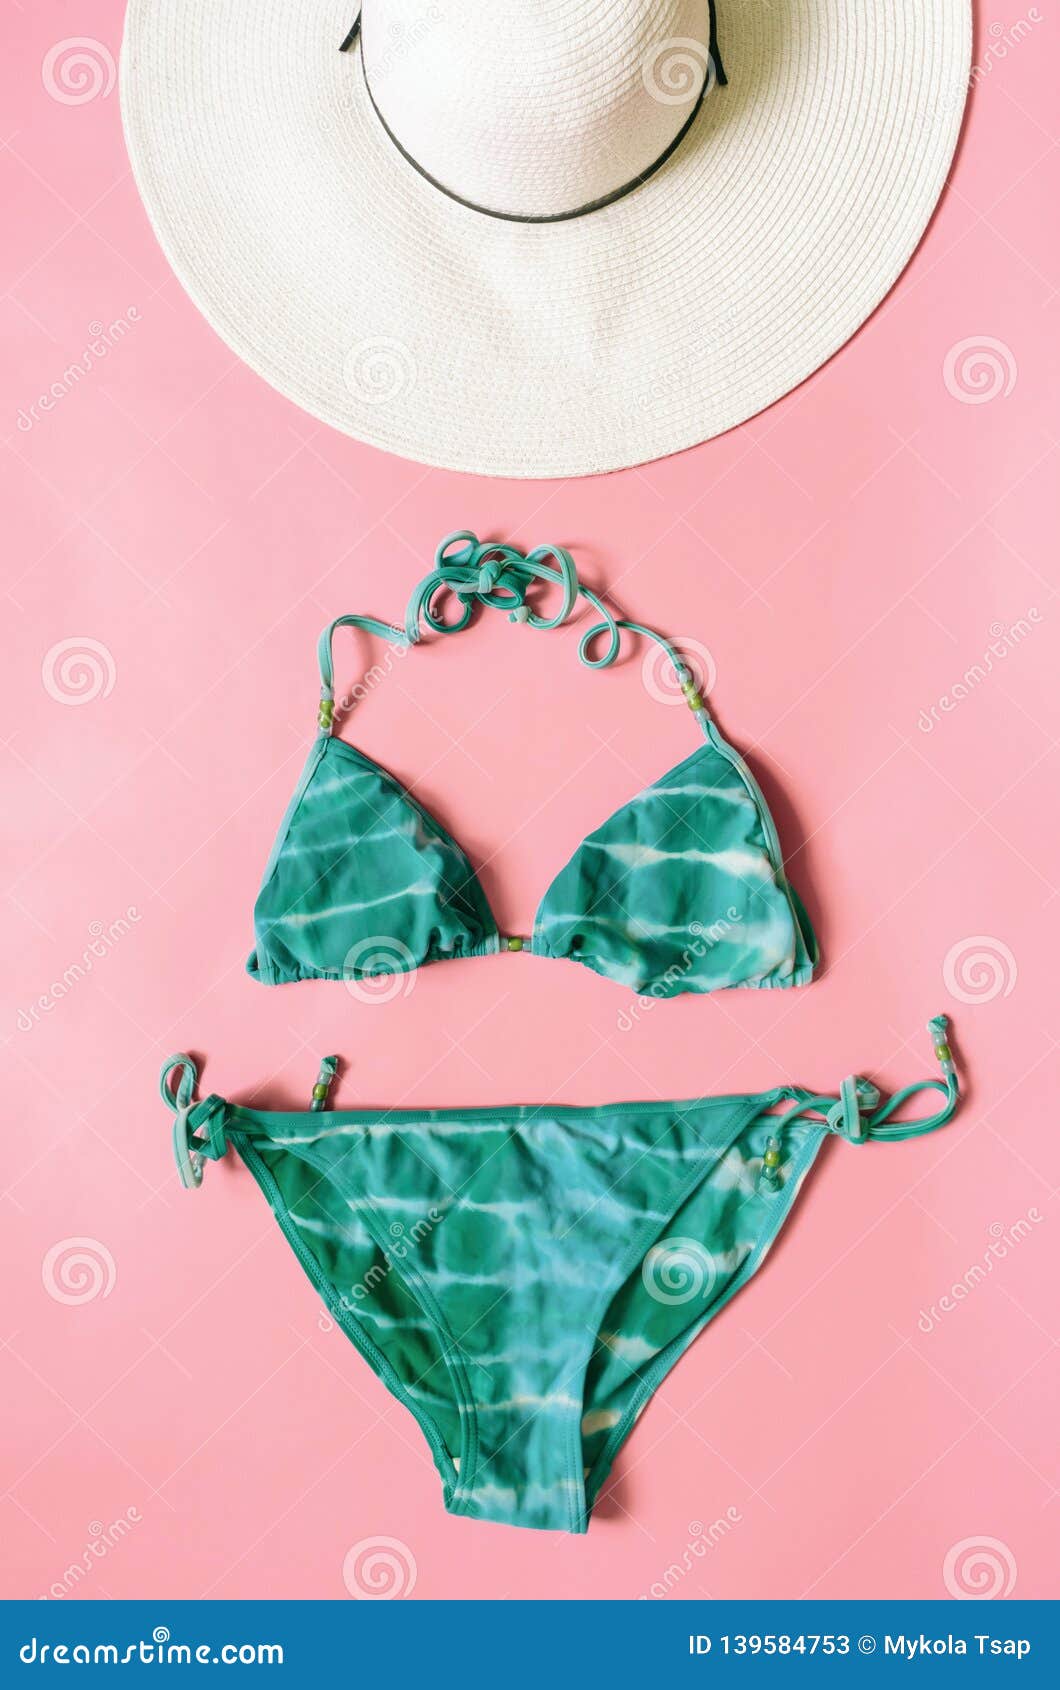 Aquamarine Bikini Swimsuit And Straw Hat Arranged On Light Pink ...